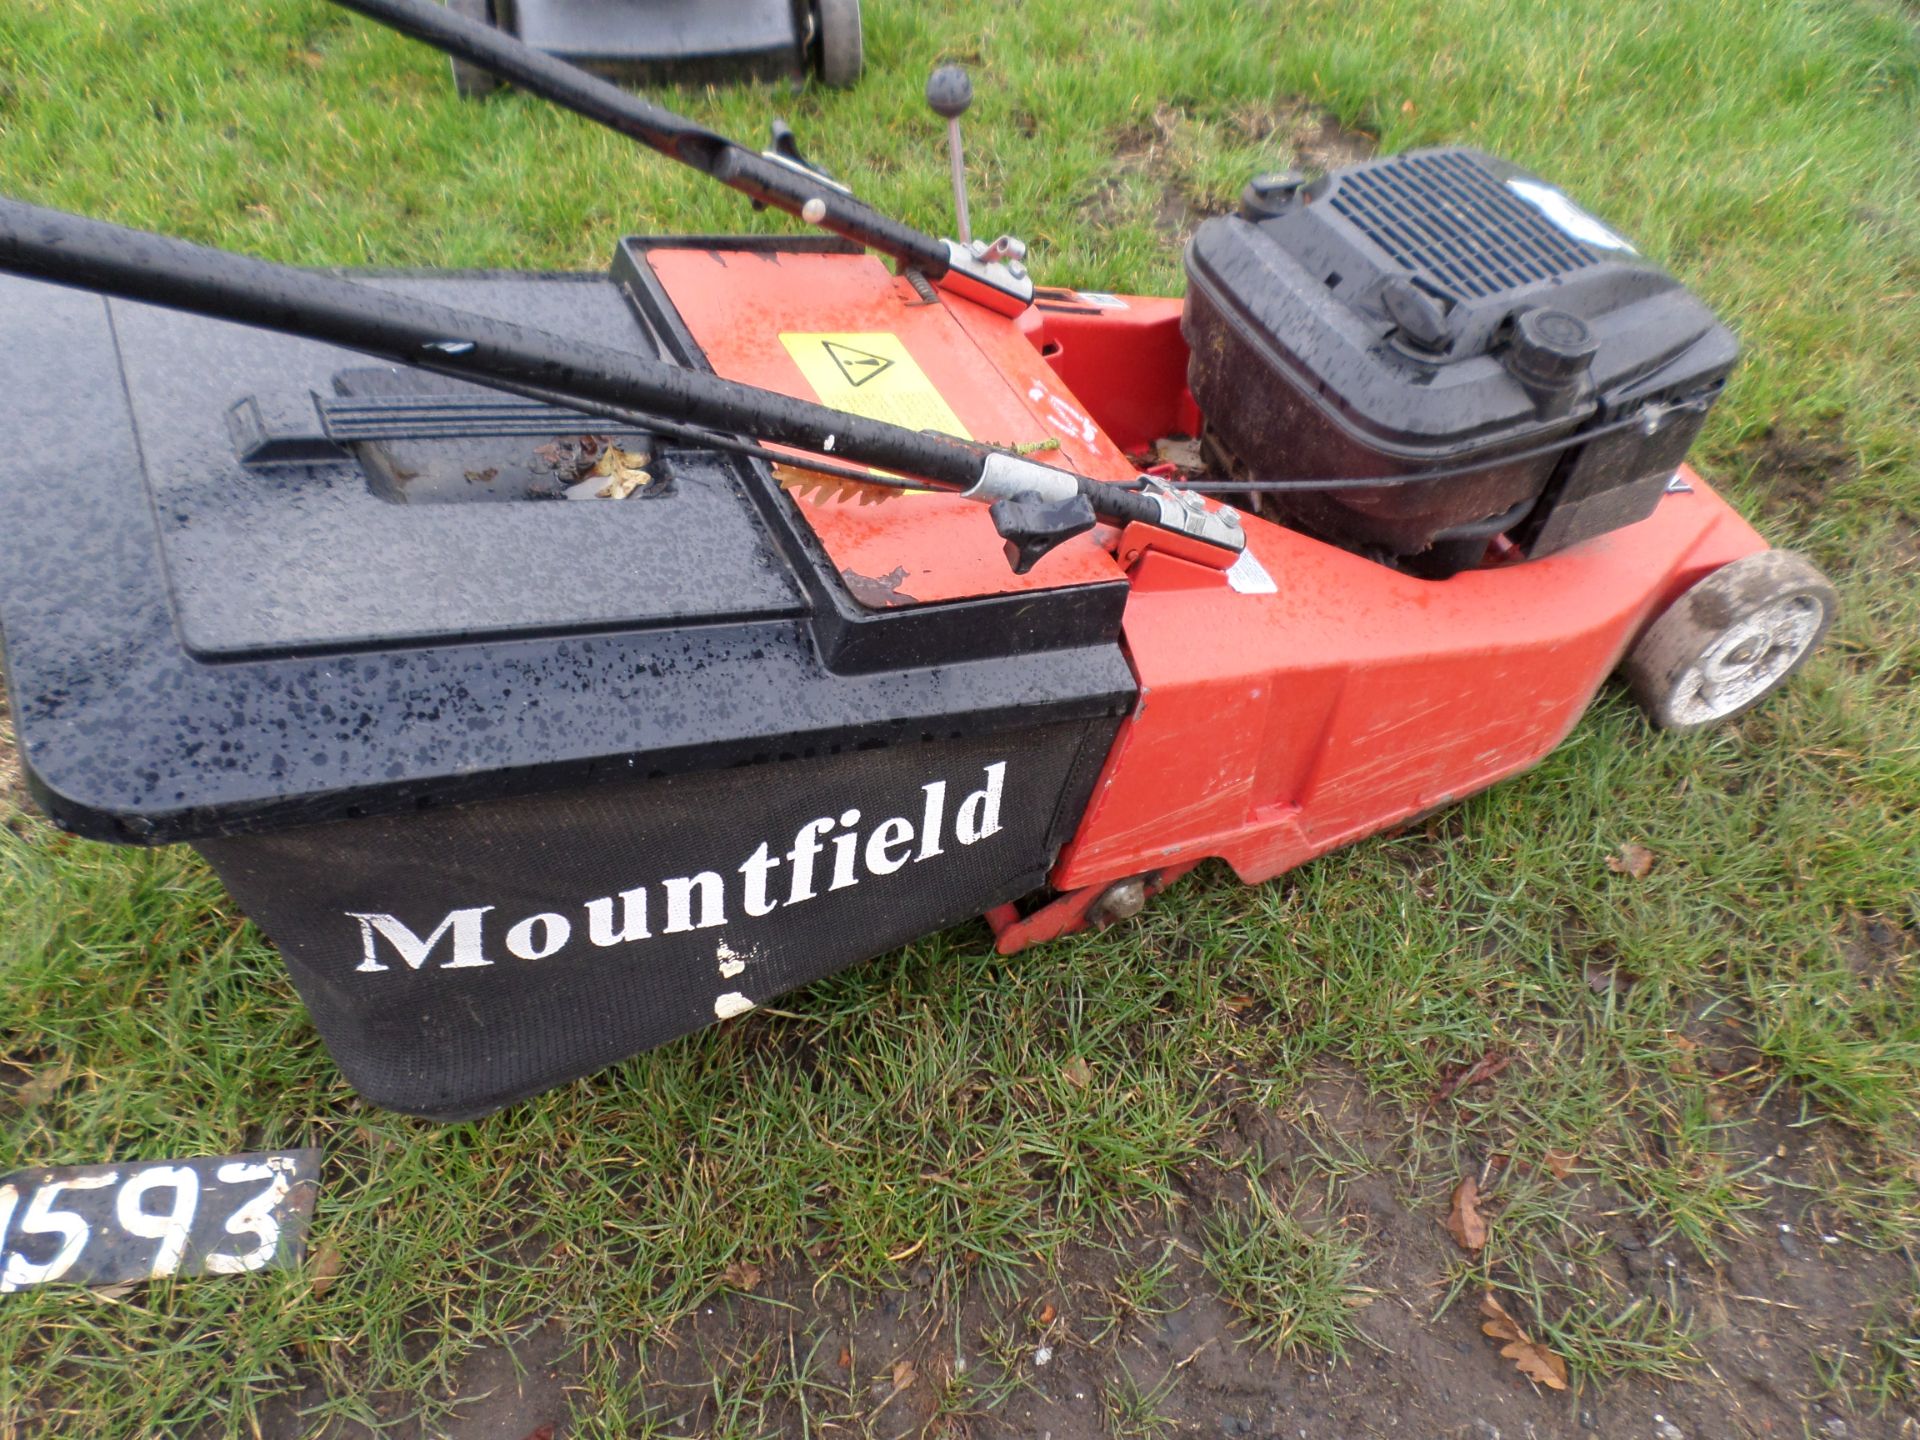 Mountfield petrol rotary mower with grass box - Image 2 of 3